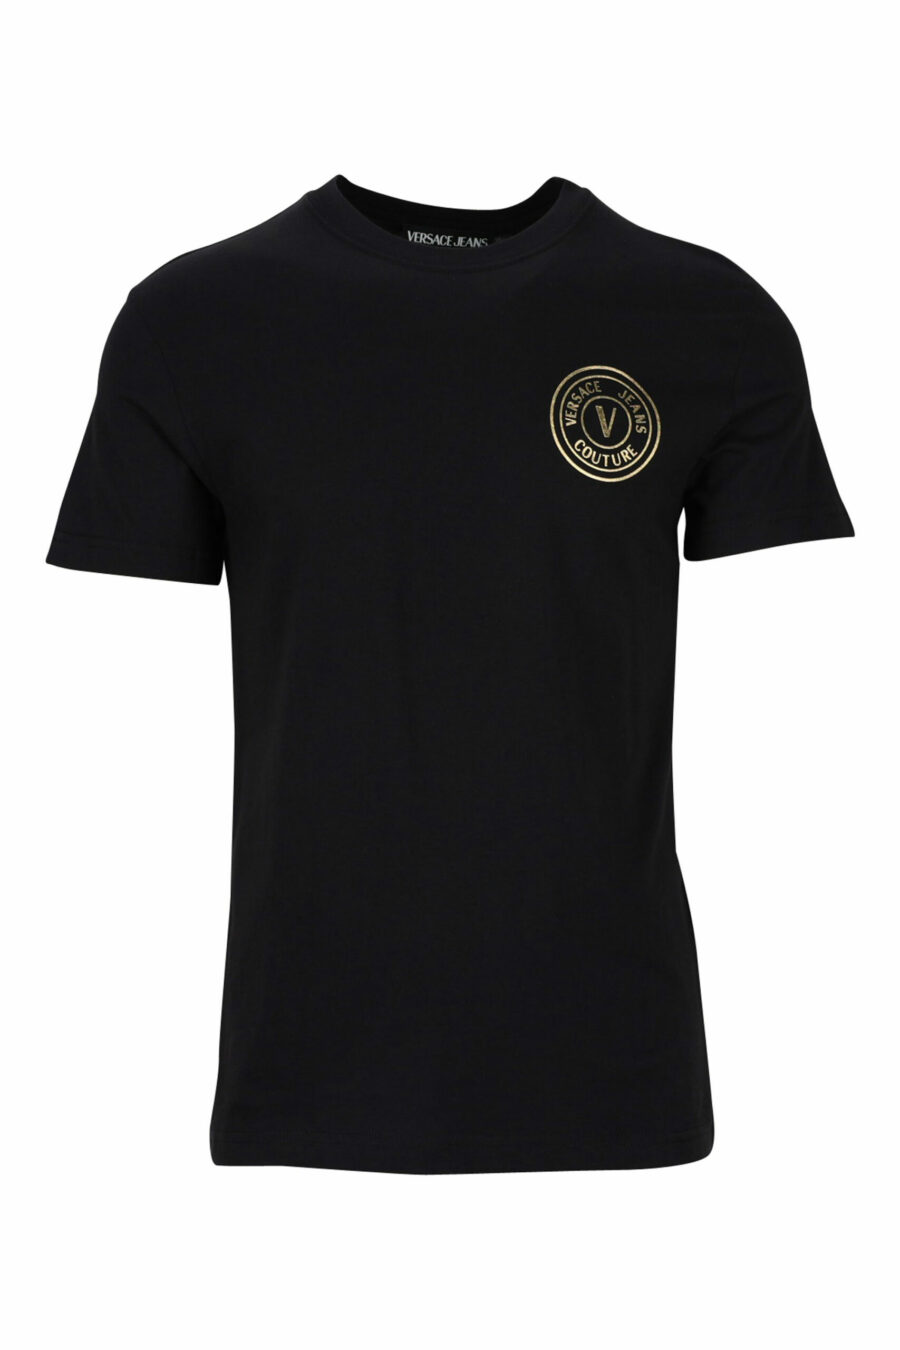 Black T-shirt with gold circular mini-logo - 8052019468465 scaled